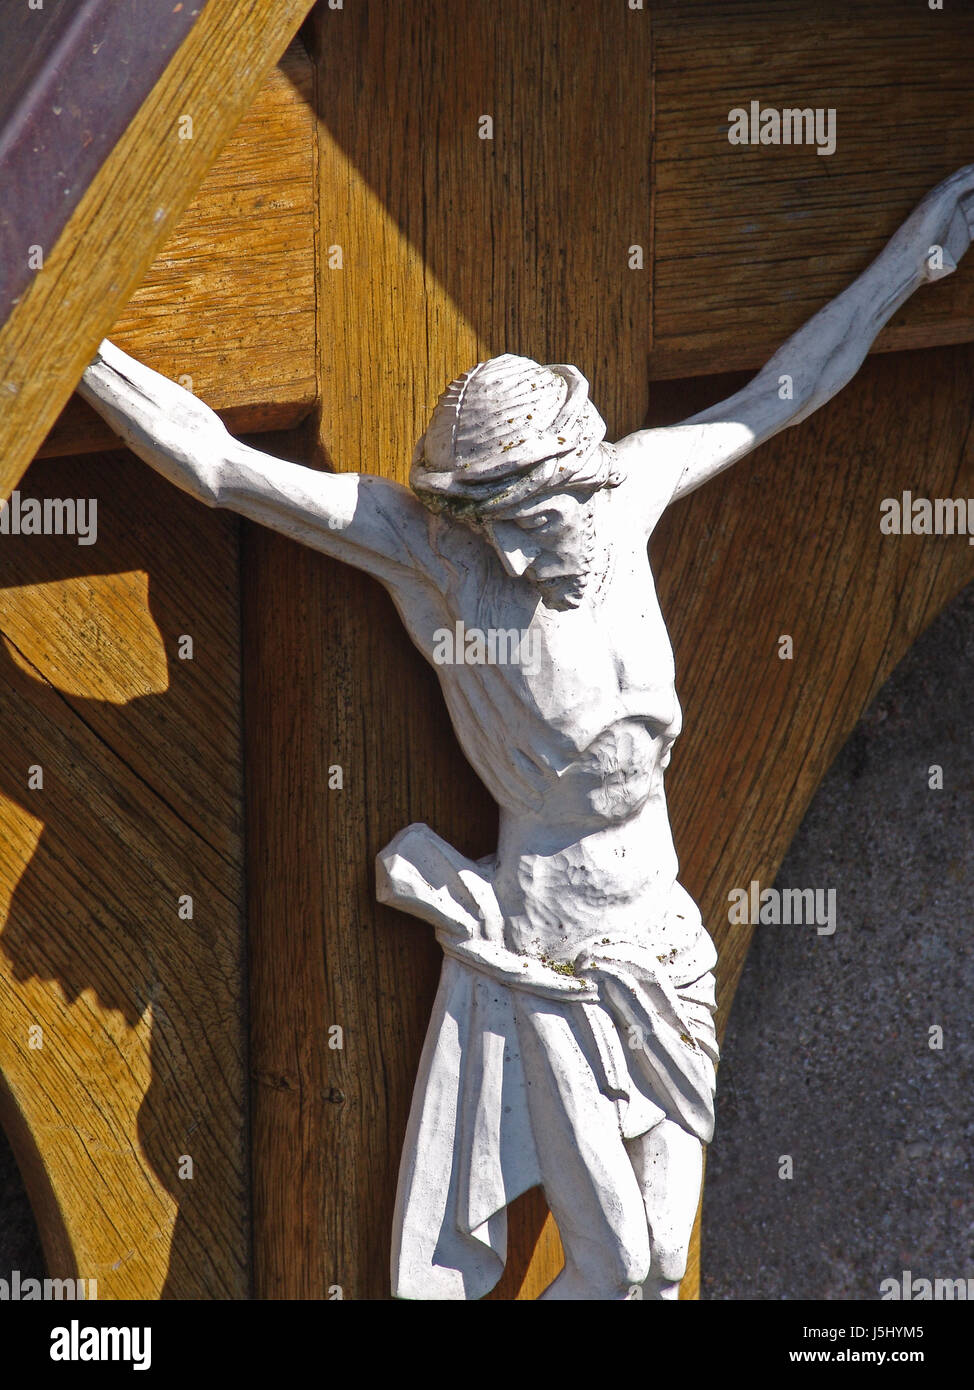 Croce di Cristo crocifisso Gesù crocifisso korpus corpus gekreuzigter friedhofskreuz Foto Stock